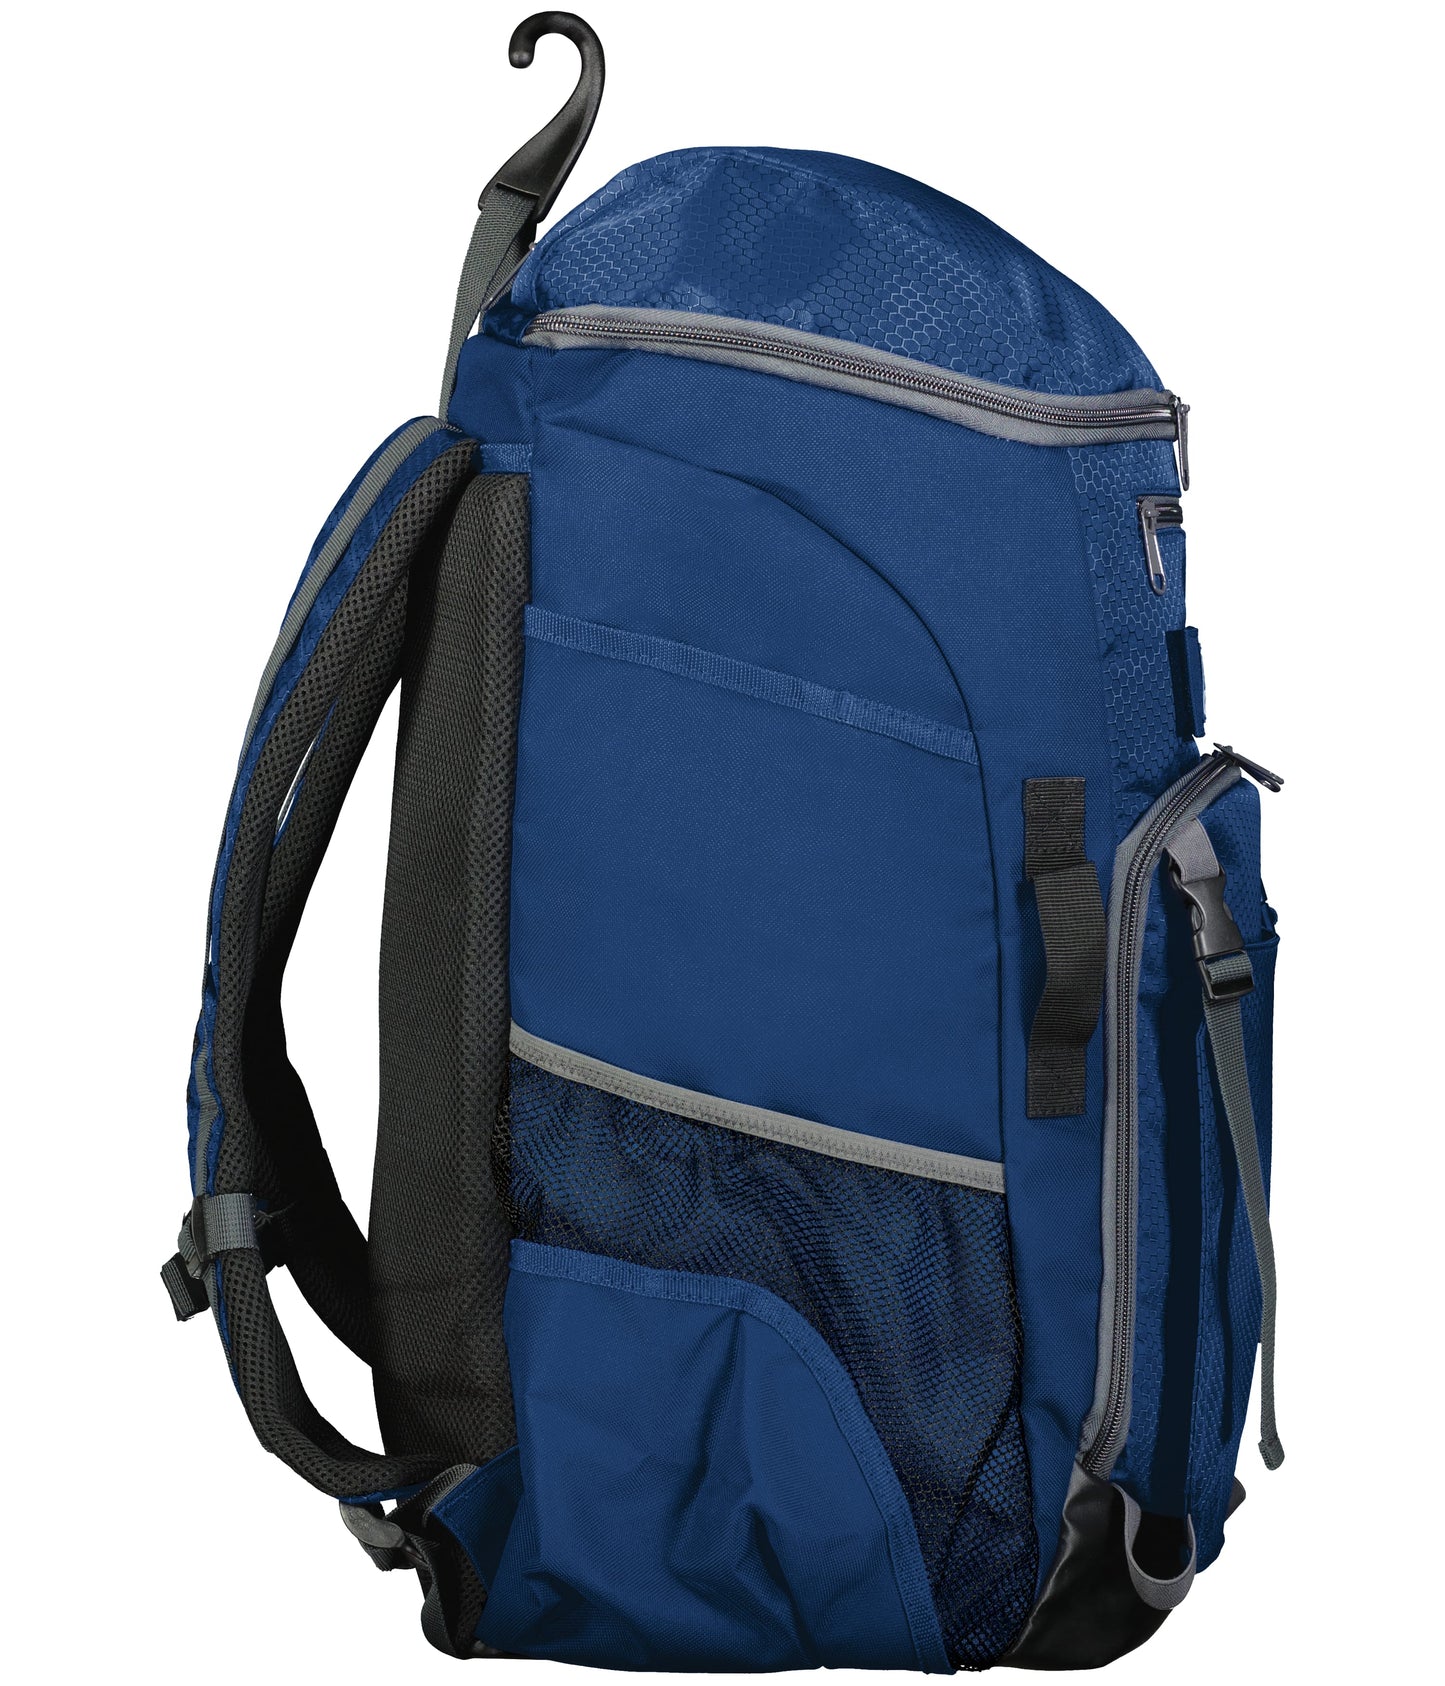 Russell Diamond Gear Backpack